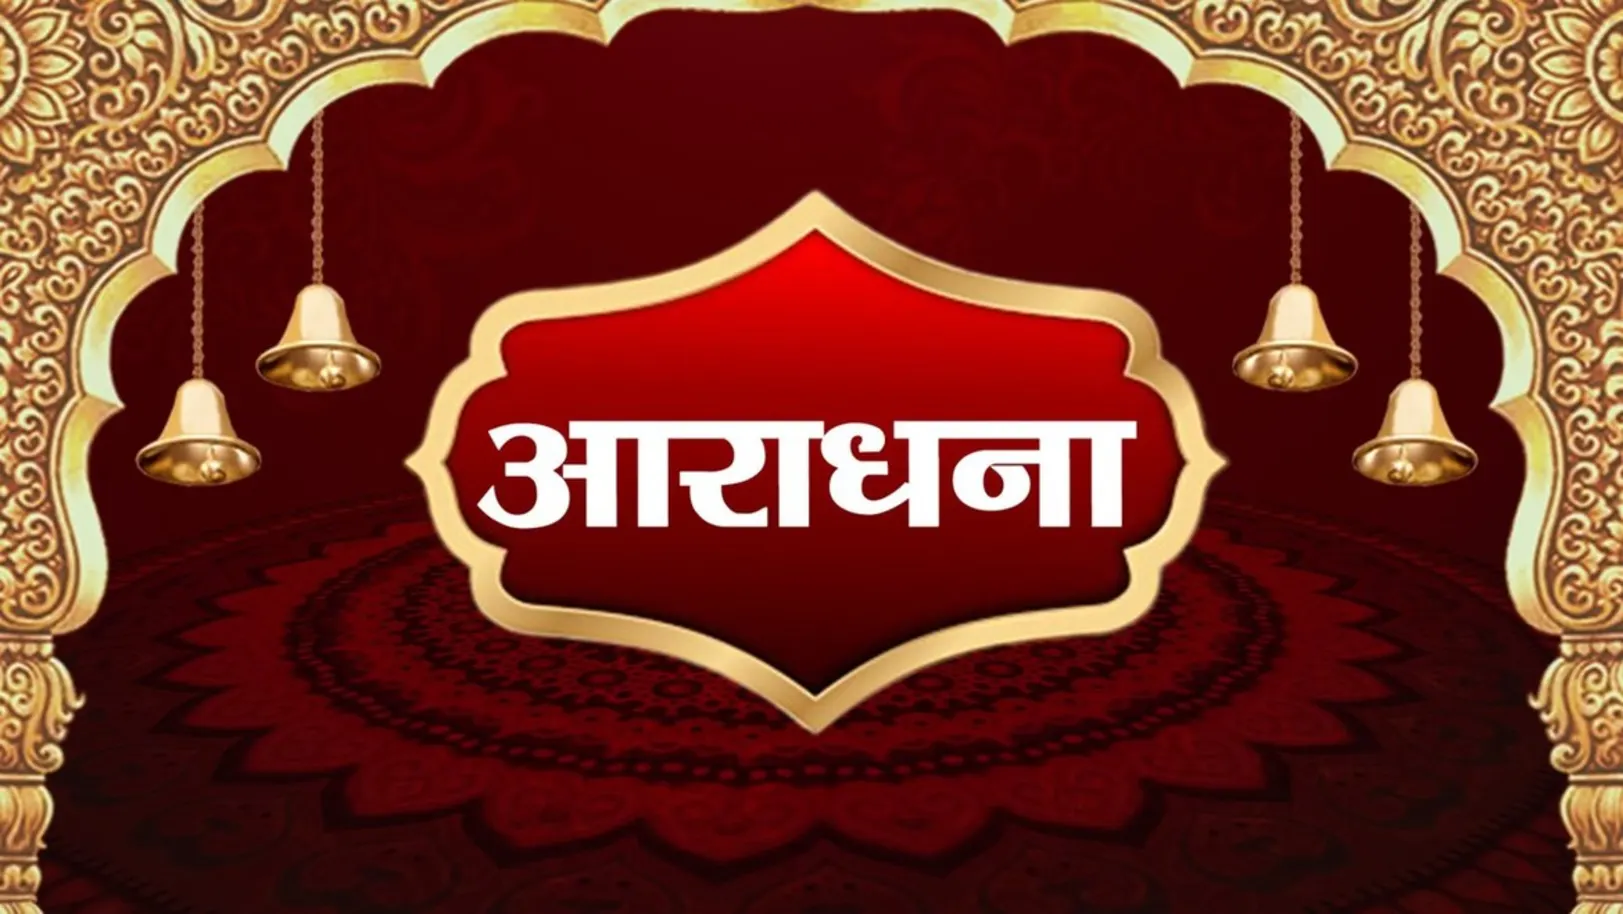 Aaradhana Streaming Now On Sanskar TV